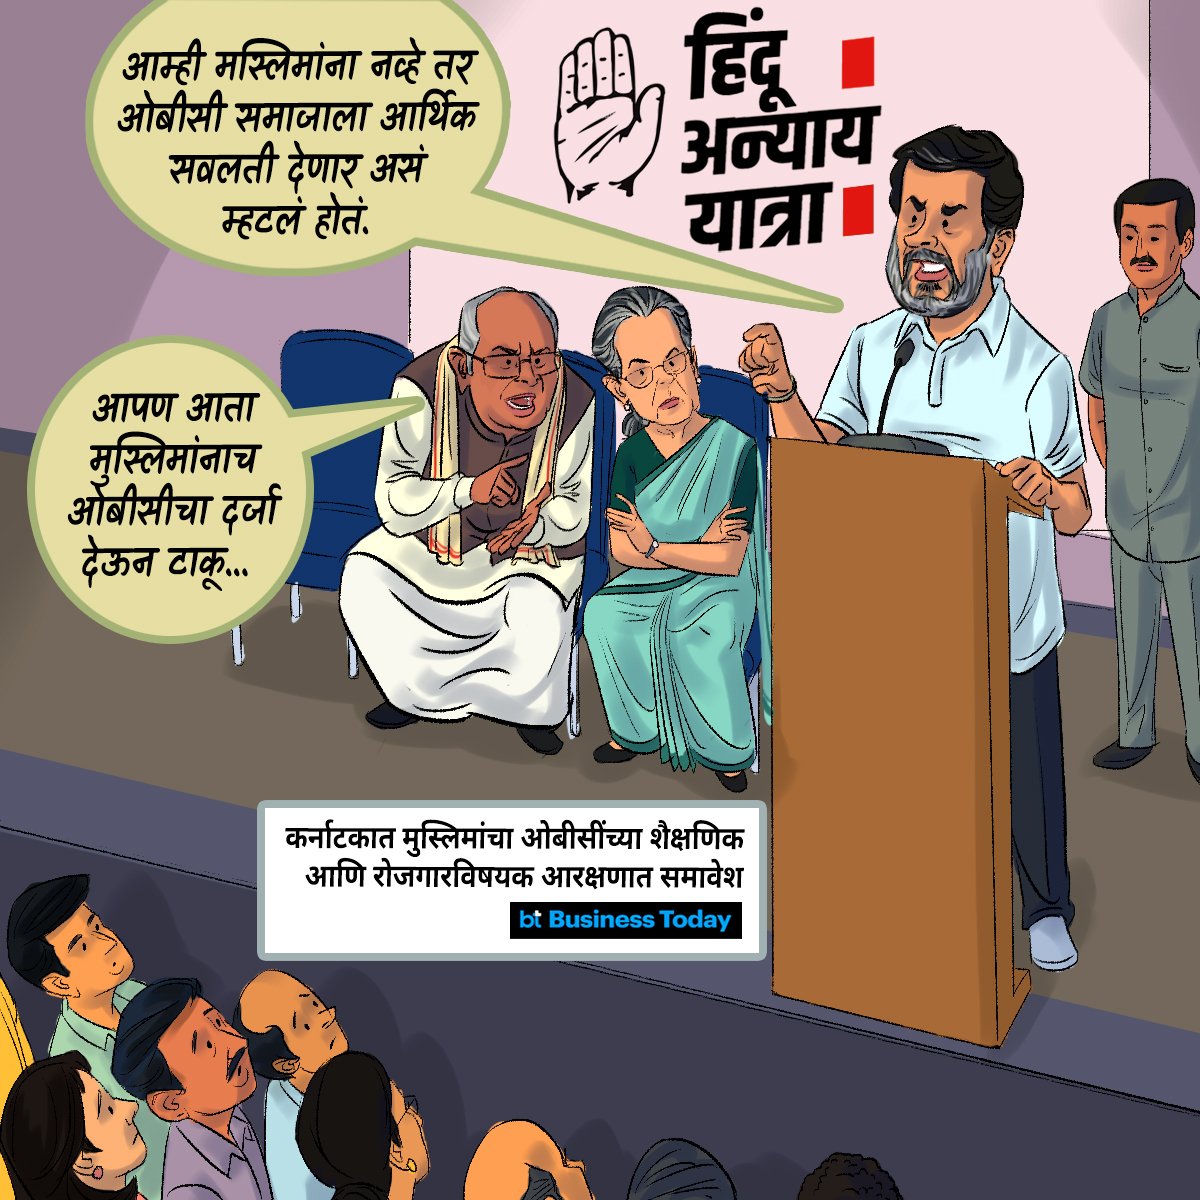 Exploits of the anti-Hindu Congress government...!!

#MallikarjunKharge
#RahulGandhi
#SoniaGandhi
#HinduDrohit
#Hindudrohi
#congress
#Maharashtra
#CongressMuktBharat
#MVA #NCP
#Corruption
#LokSabhaElections
#L